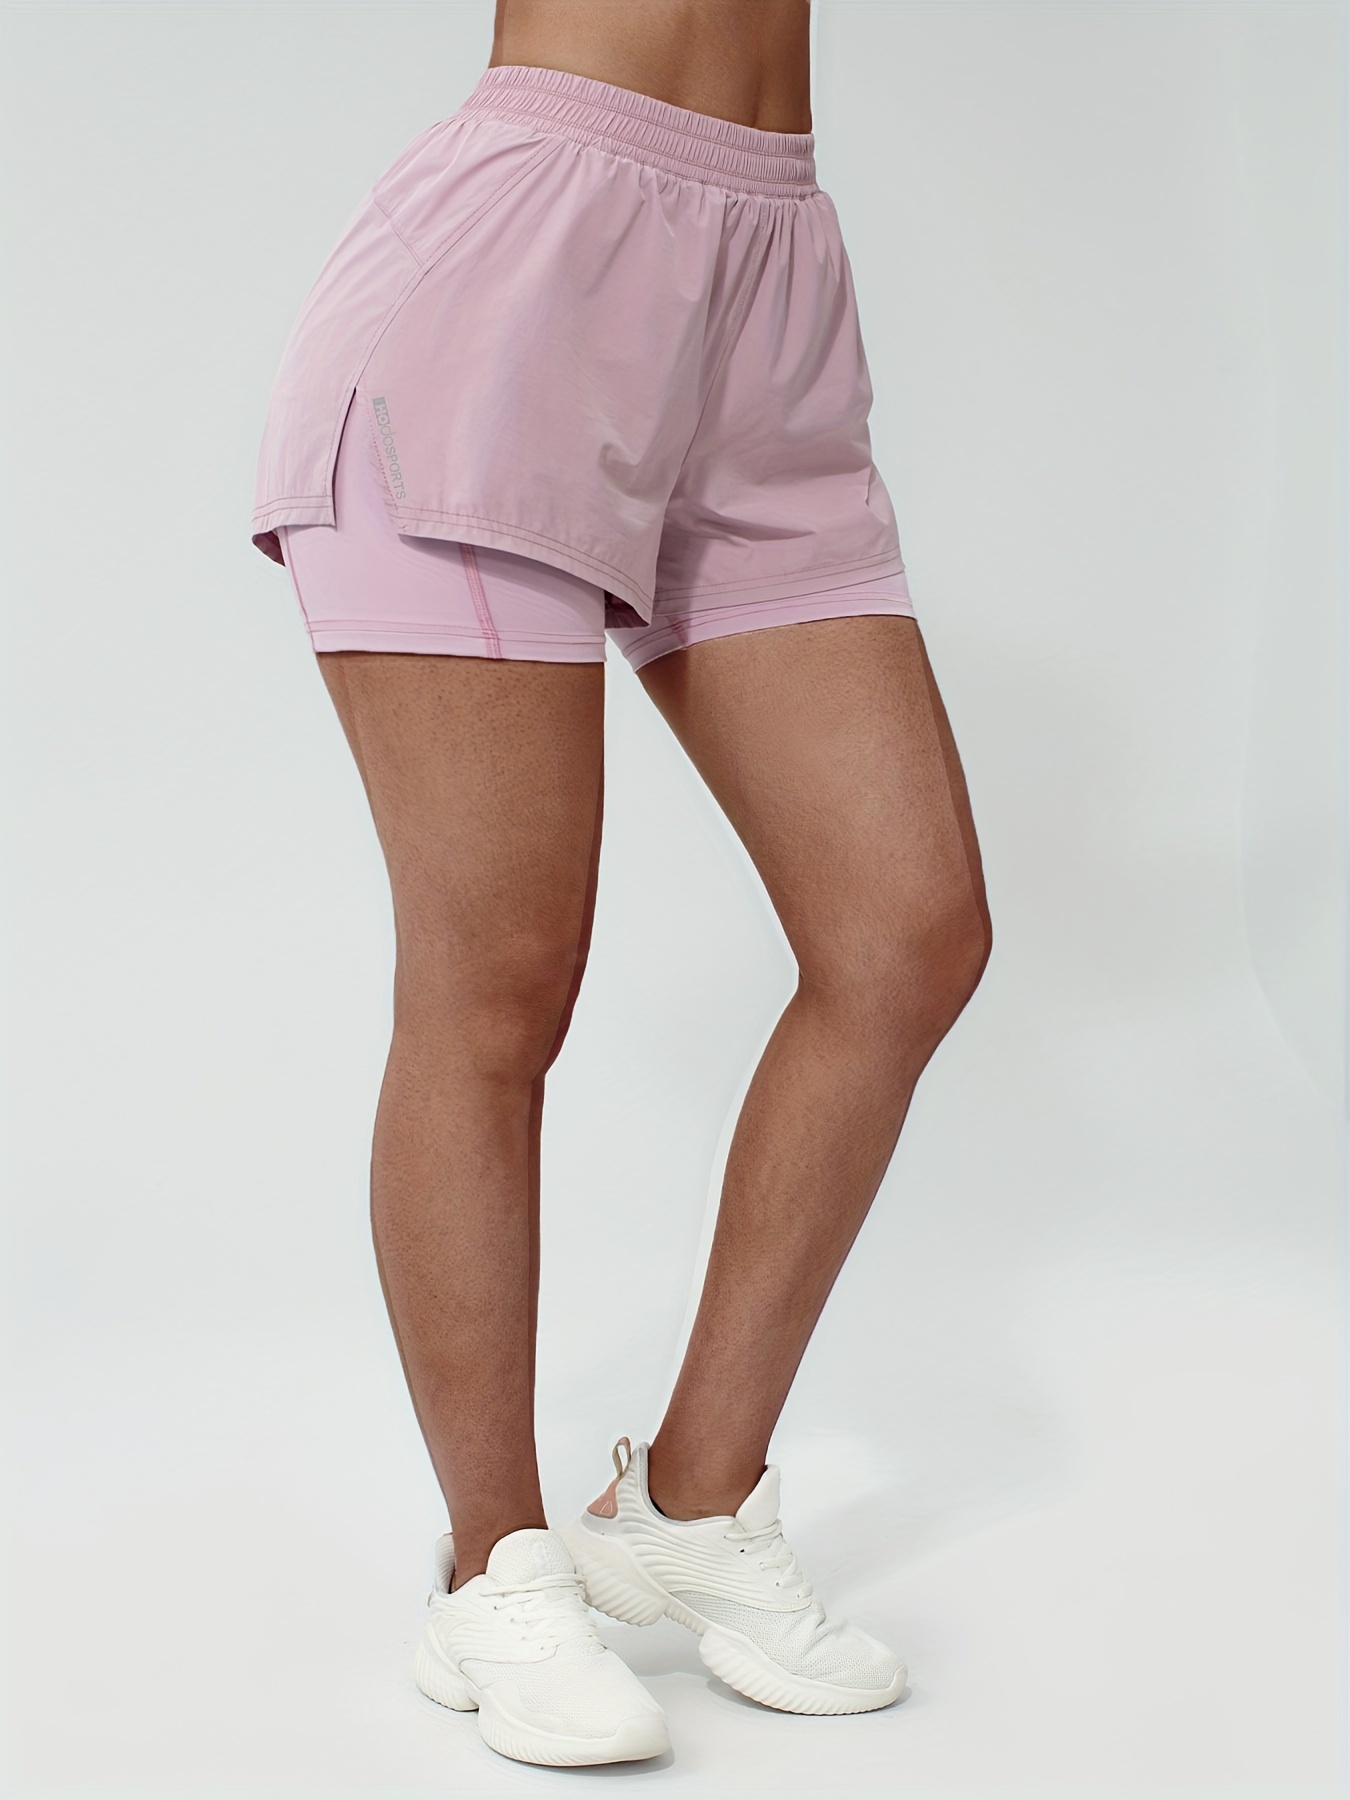 VA Di Ii - Pantalones cortos deportivos para Mujer